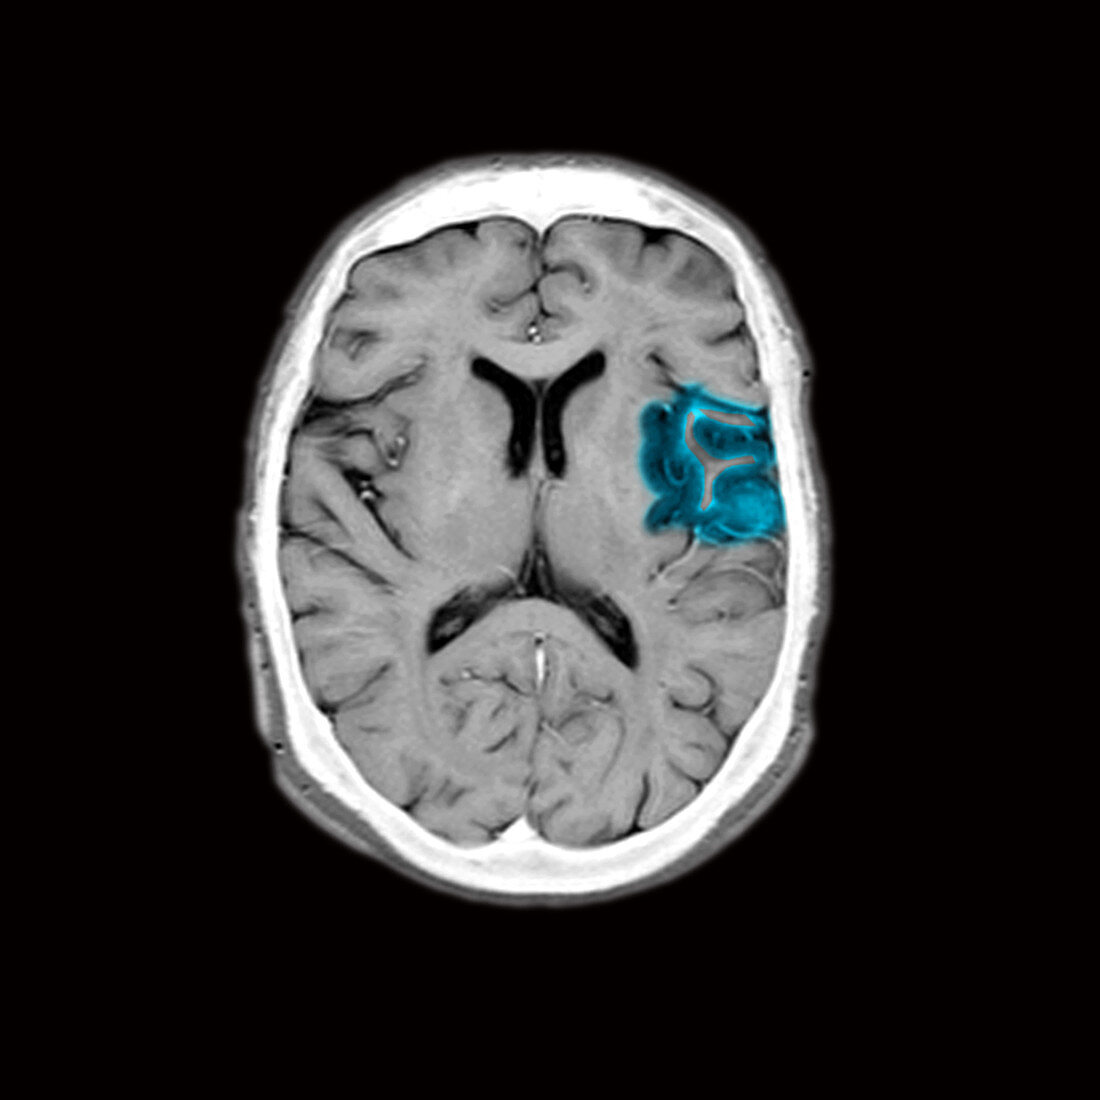 MRI of brain with acute stroke